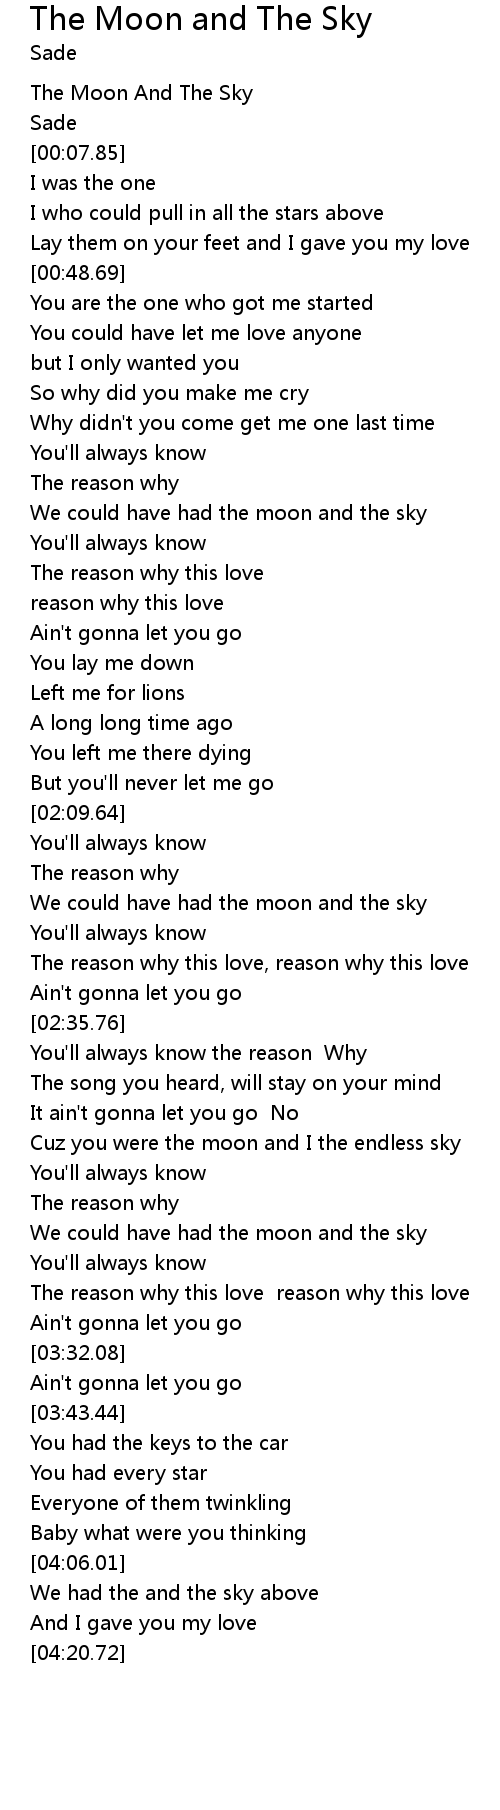 The Moon And The Sky Lyrics Follow Lyrics